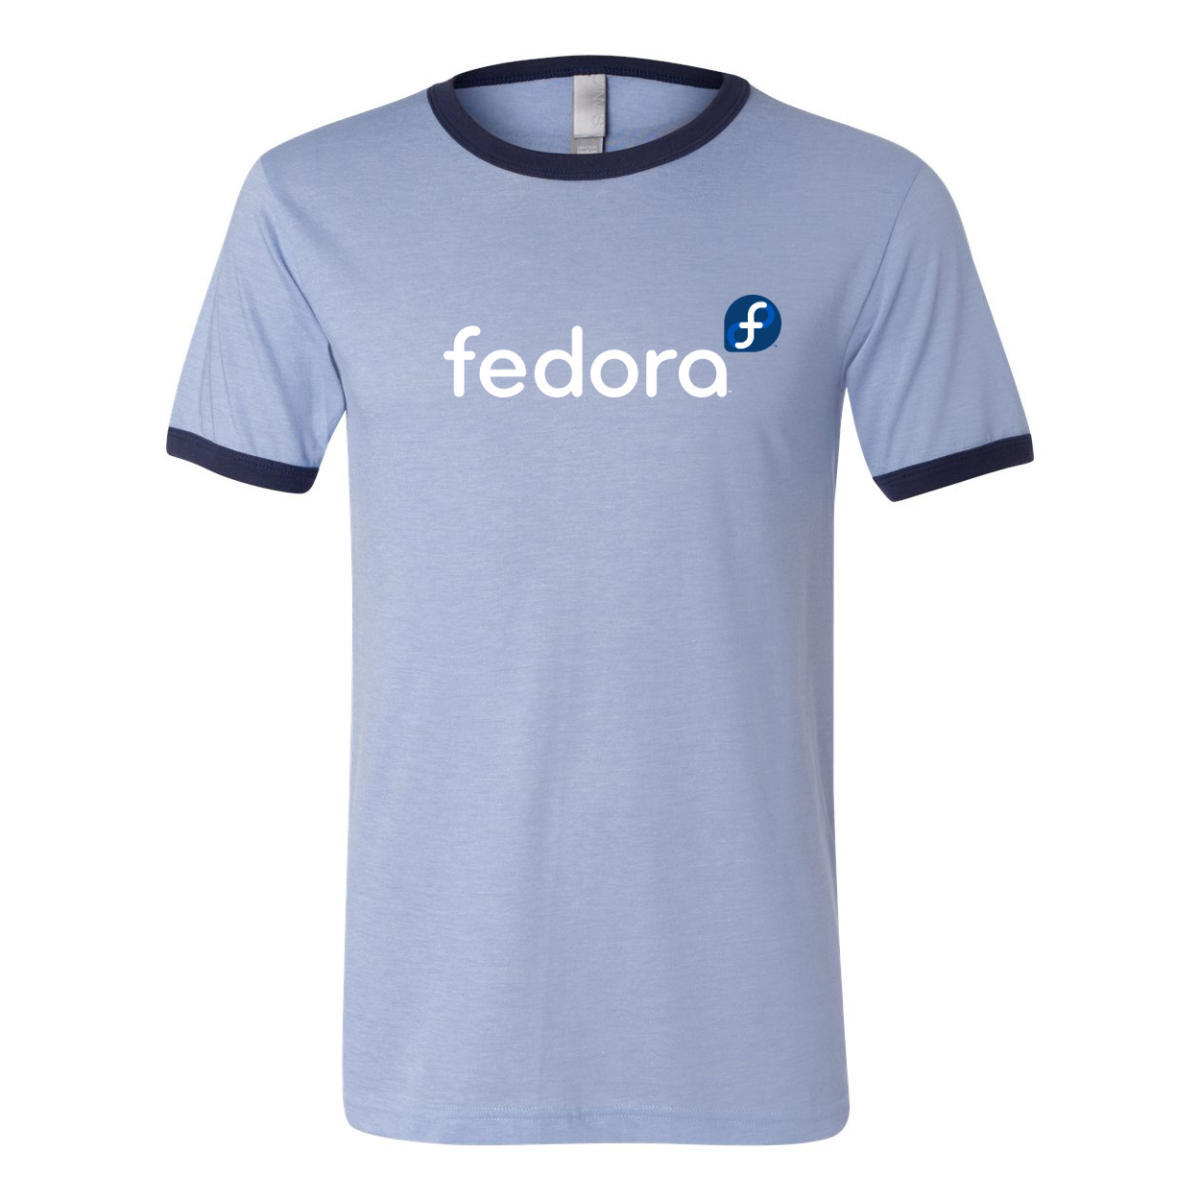 Red Hat Fedora Ringer T-Shirt